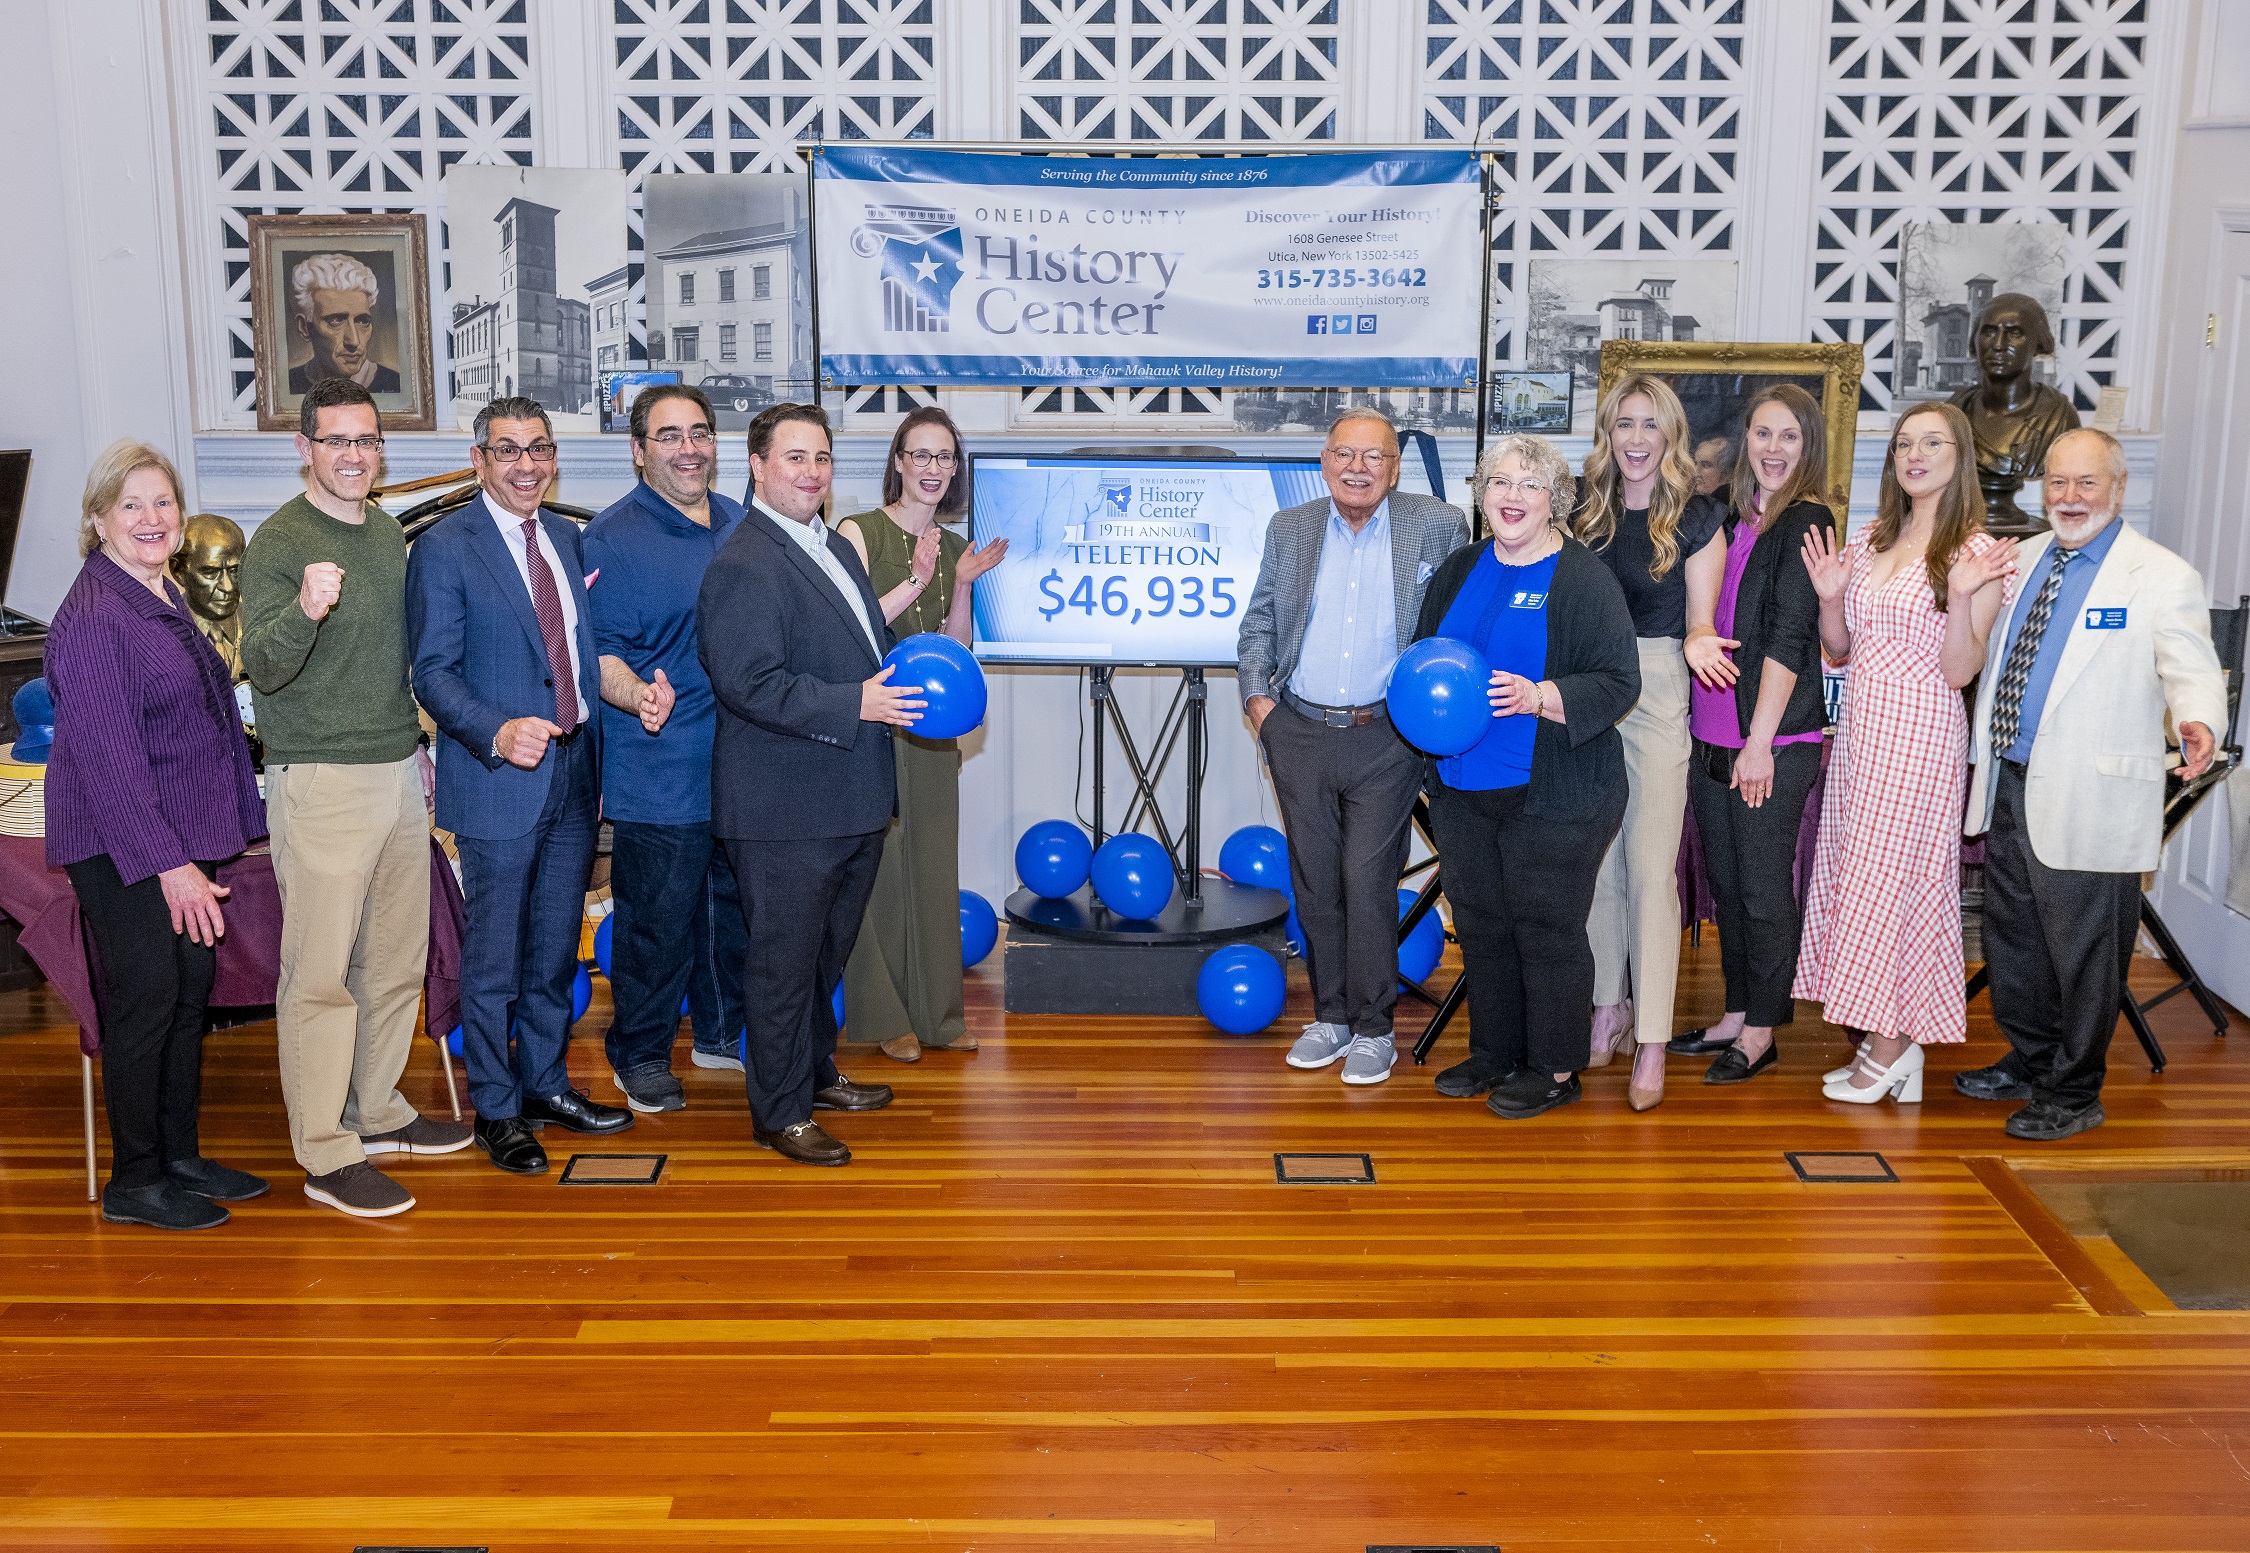 19th Annual History Center Telethon Raises $47,000!